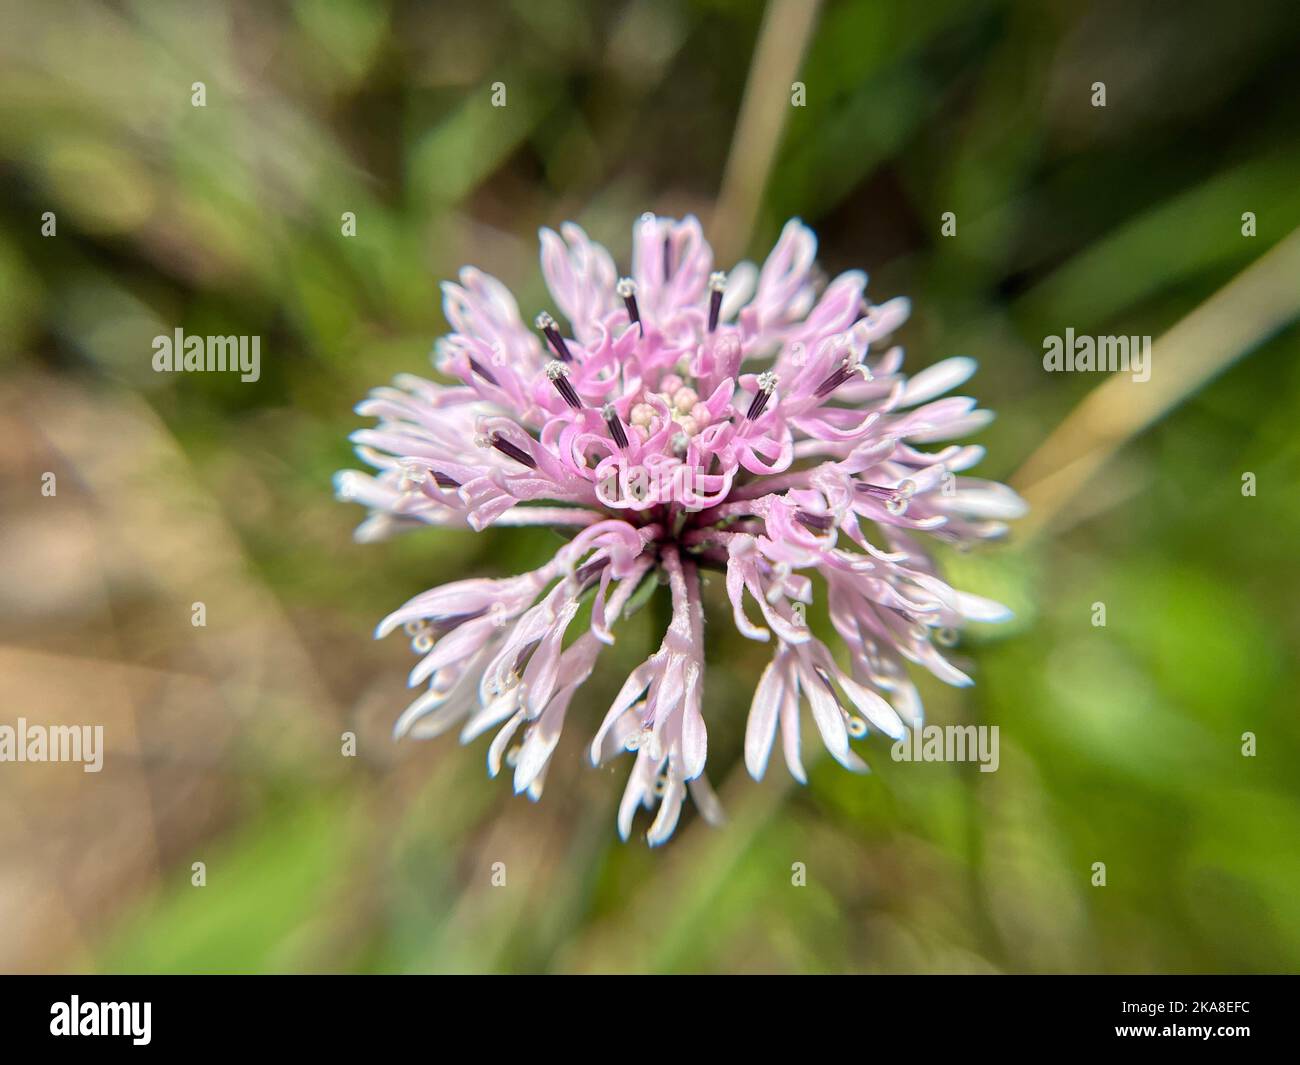 A selective focus shot of marshallia mohrii in the garden Stock Photo